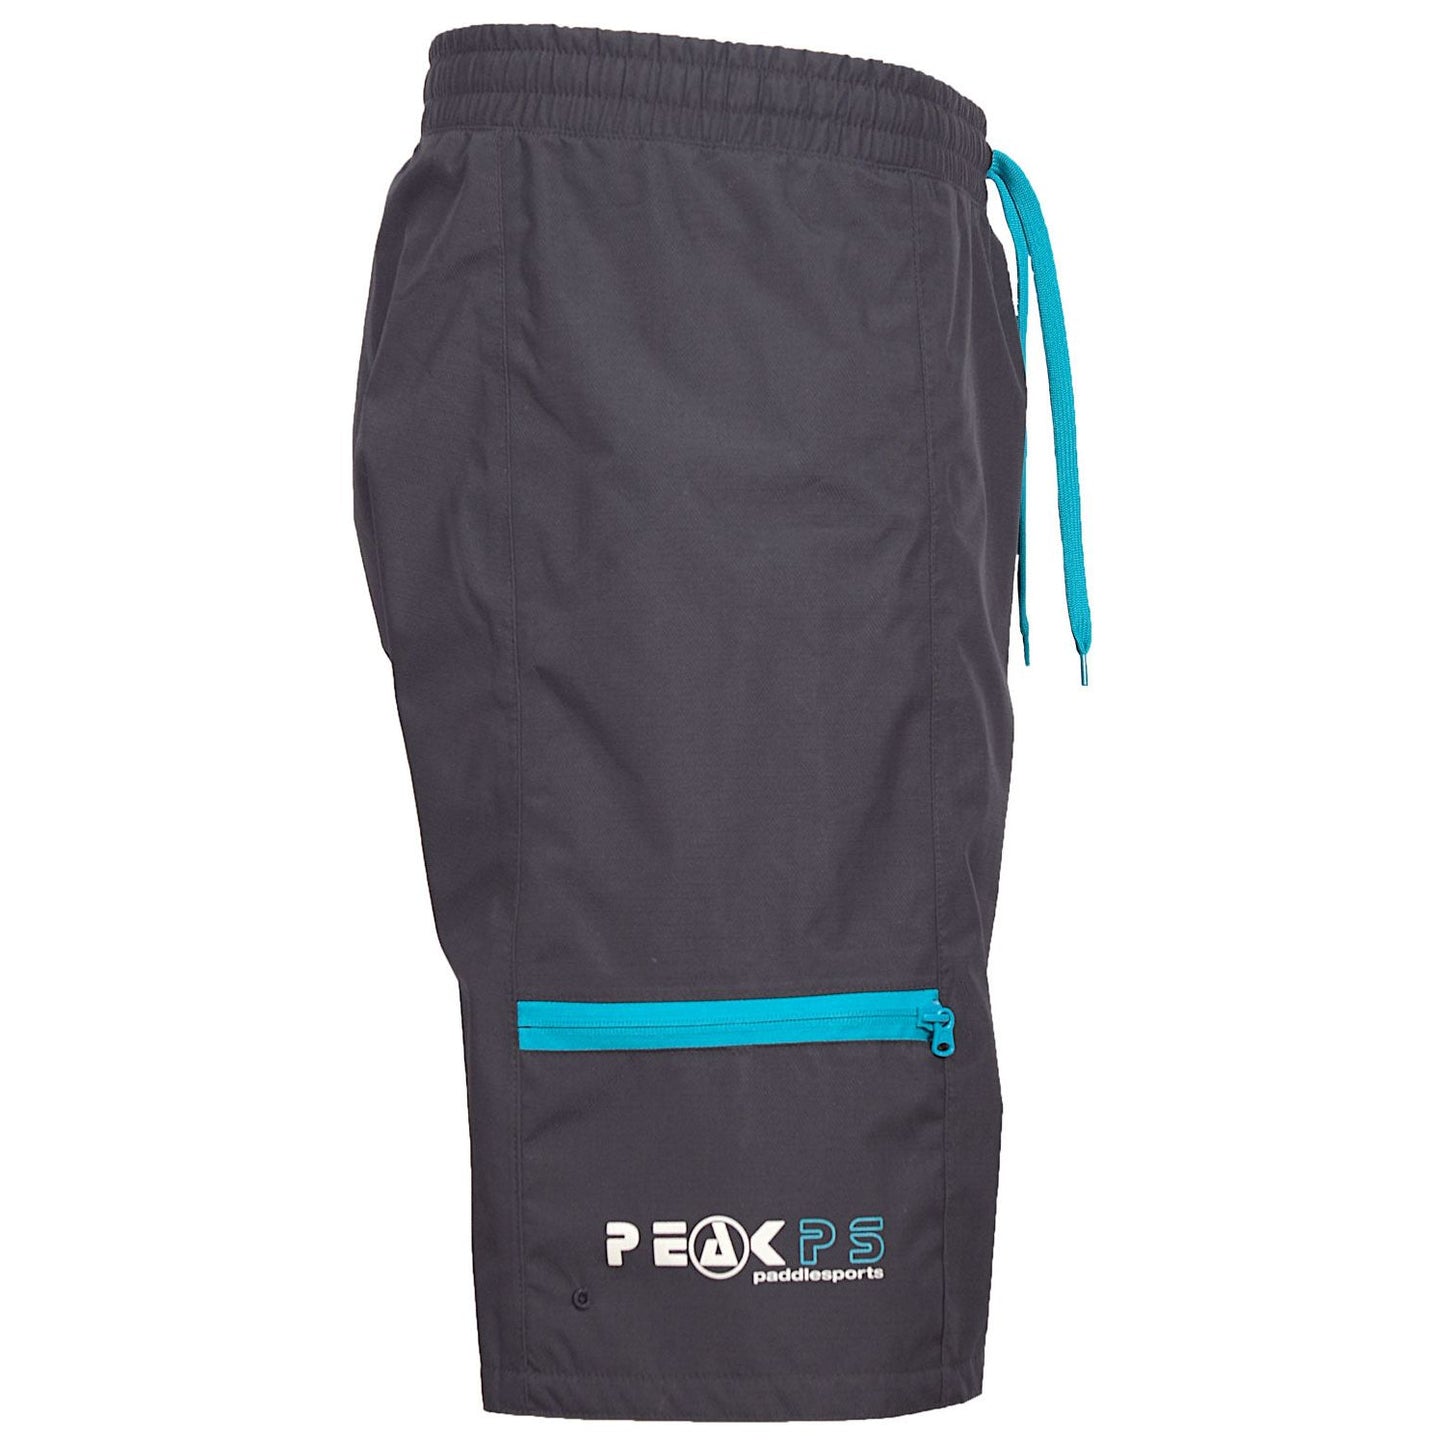 Bagz H2O Ladies Shorts - Peak PS